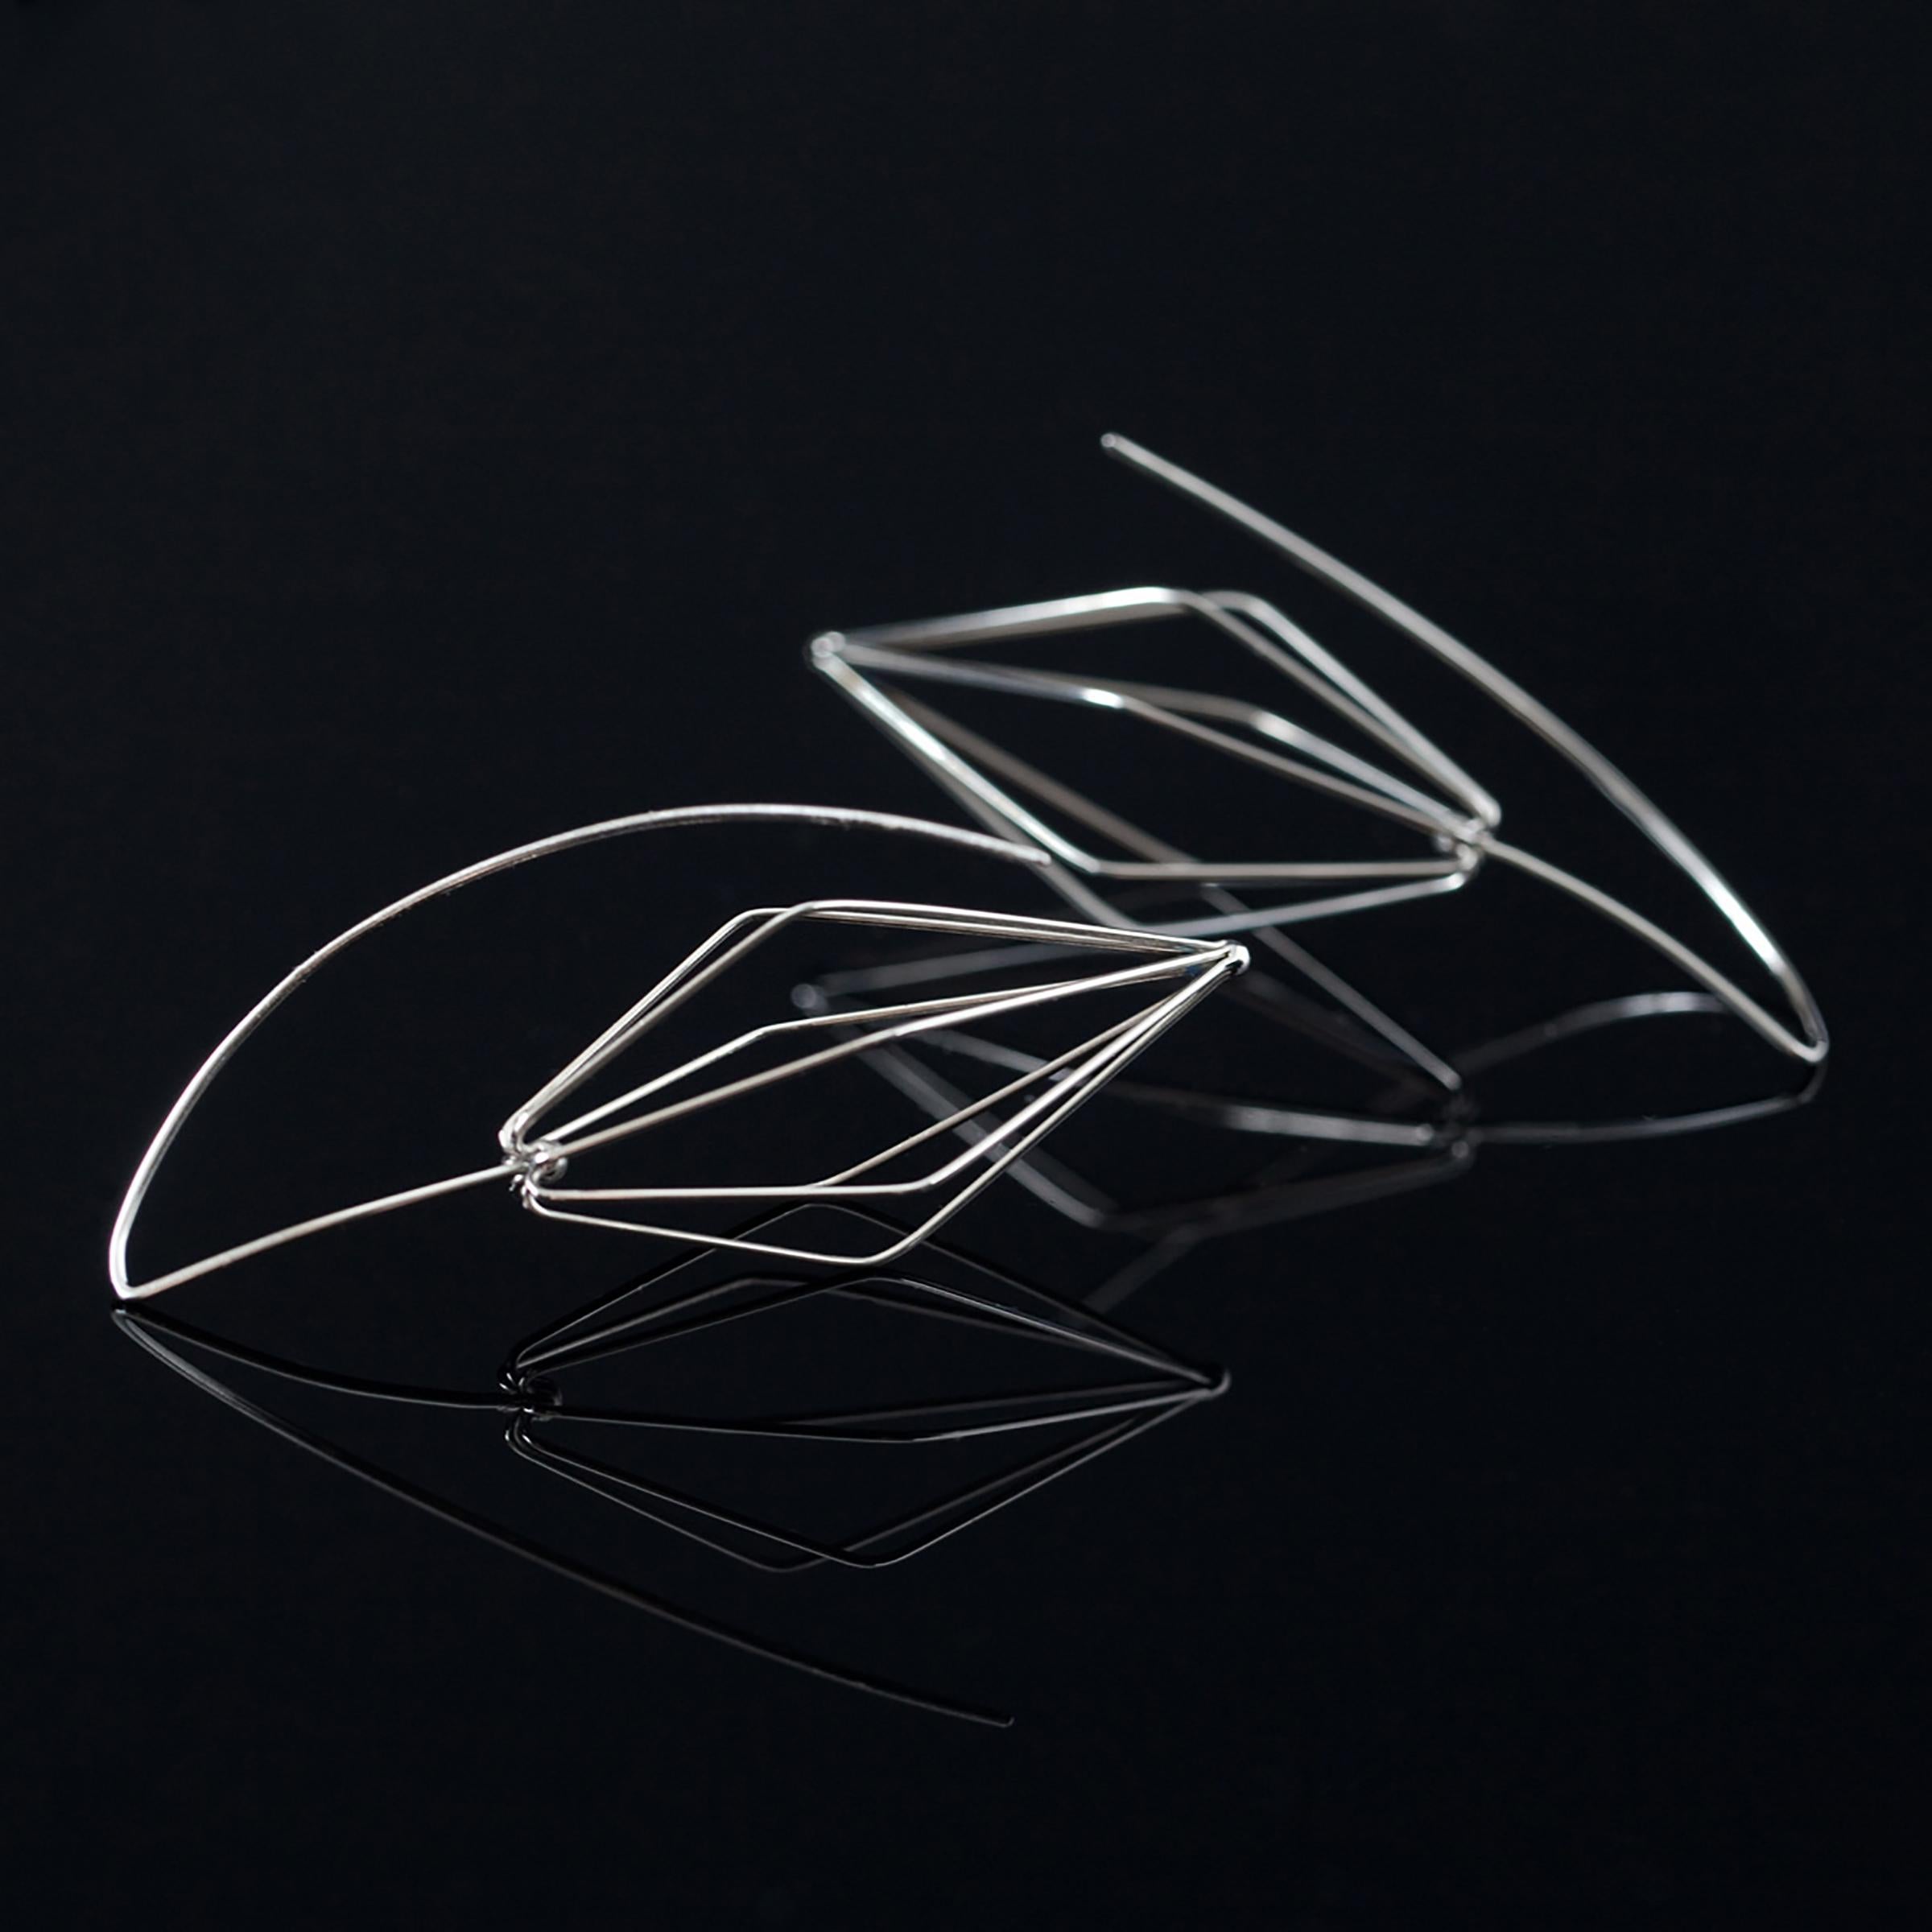 Julie Lake Abstract Sculpture - "Fennel Earrings" a contemporary, geometric, fine gauge stainless steel earrings